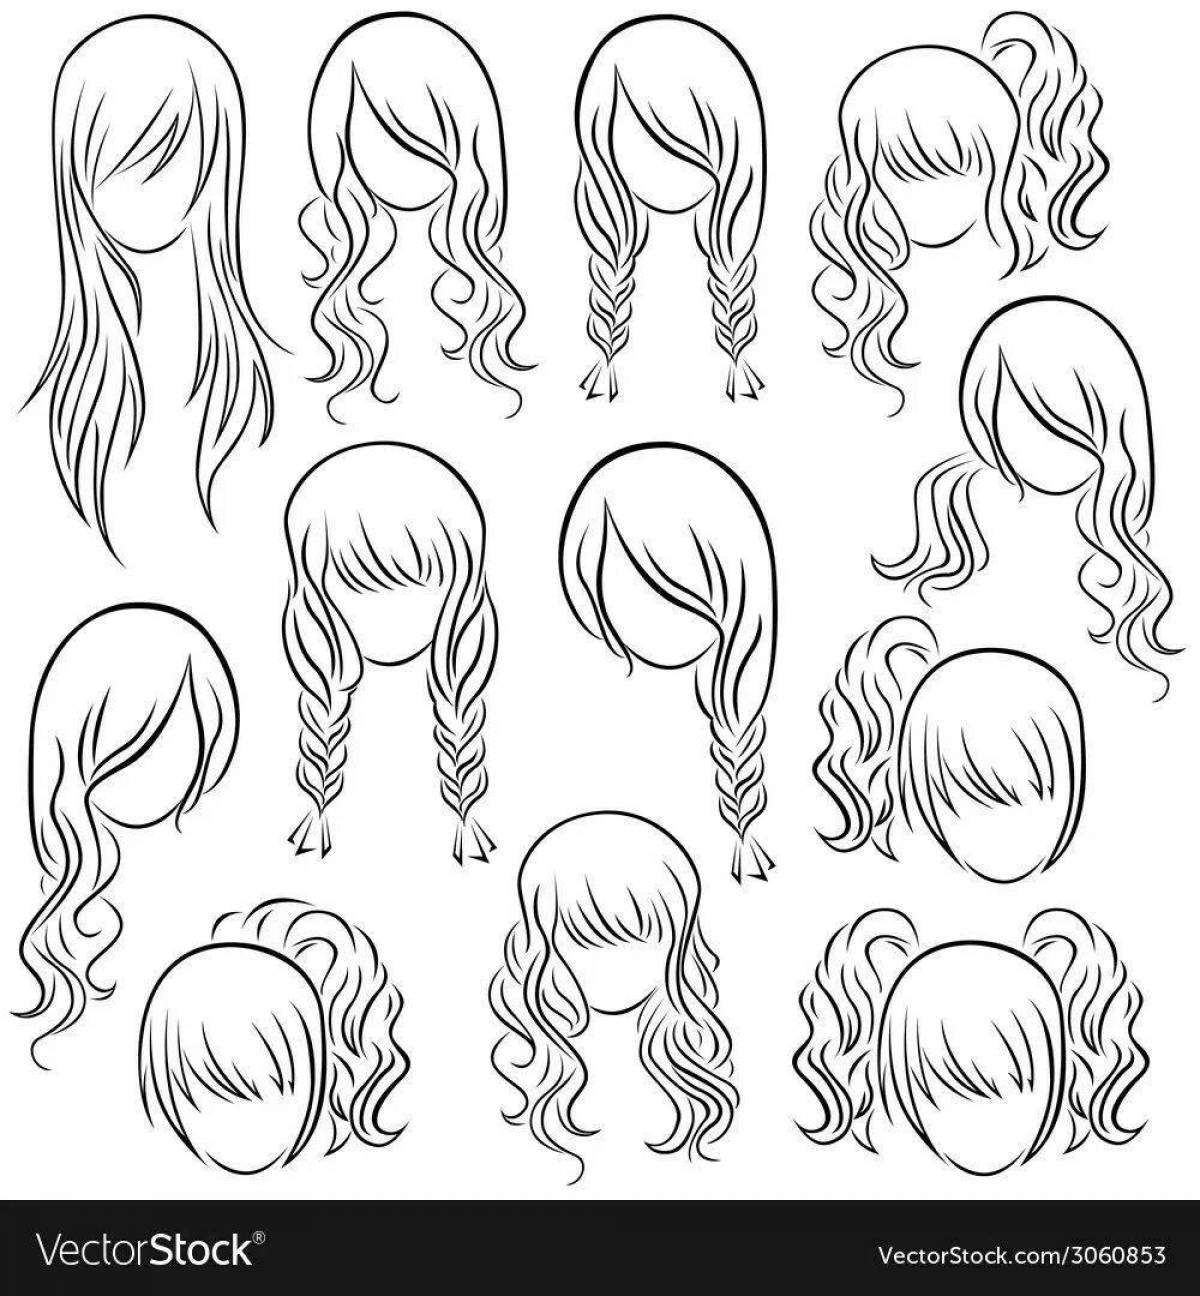 Fun hairstyles for girls